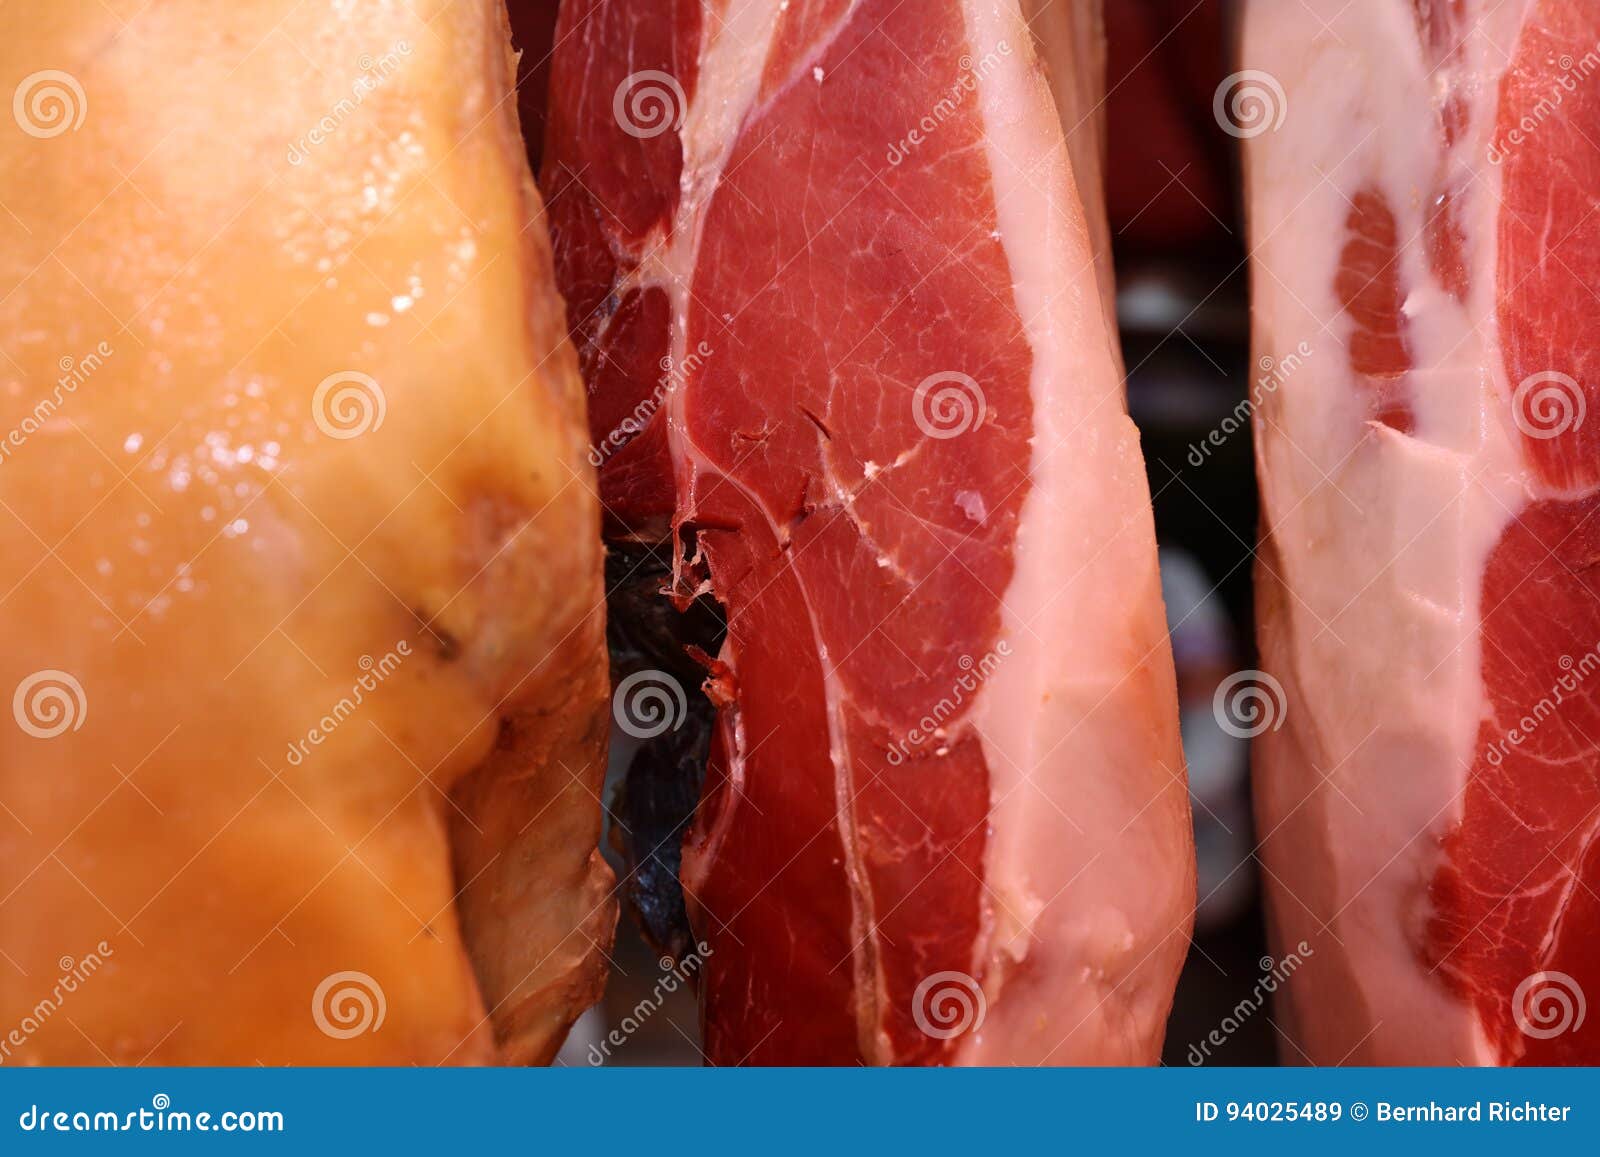 cured ham jamon iberico on market in madrid